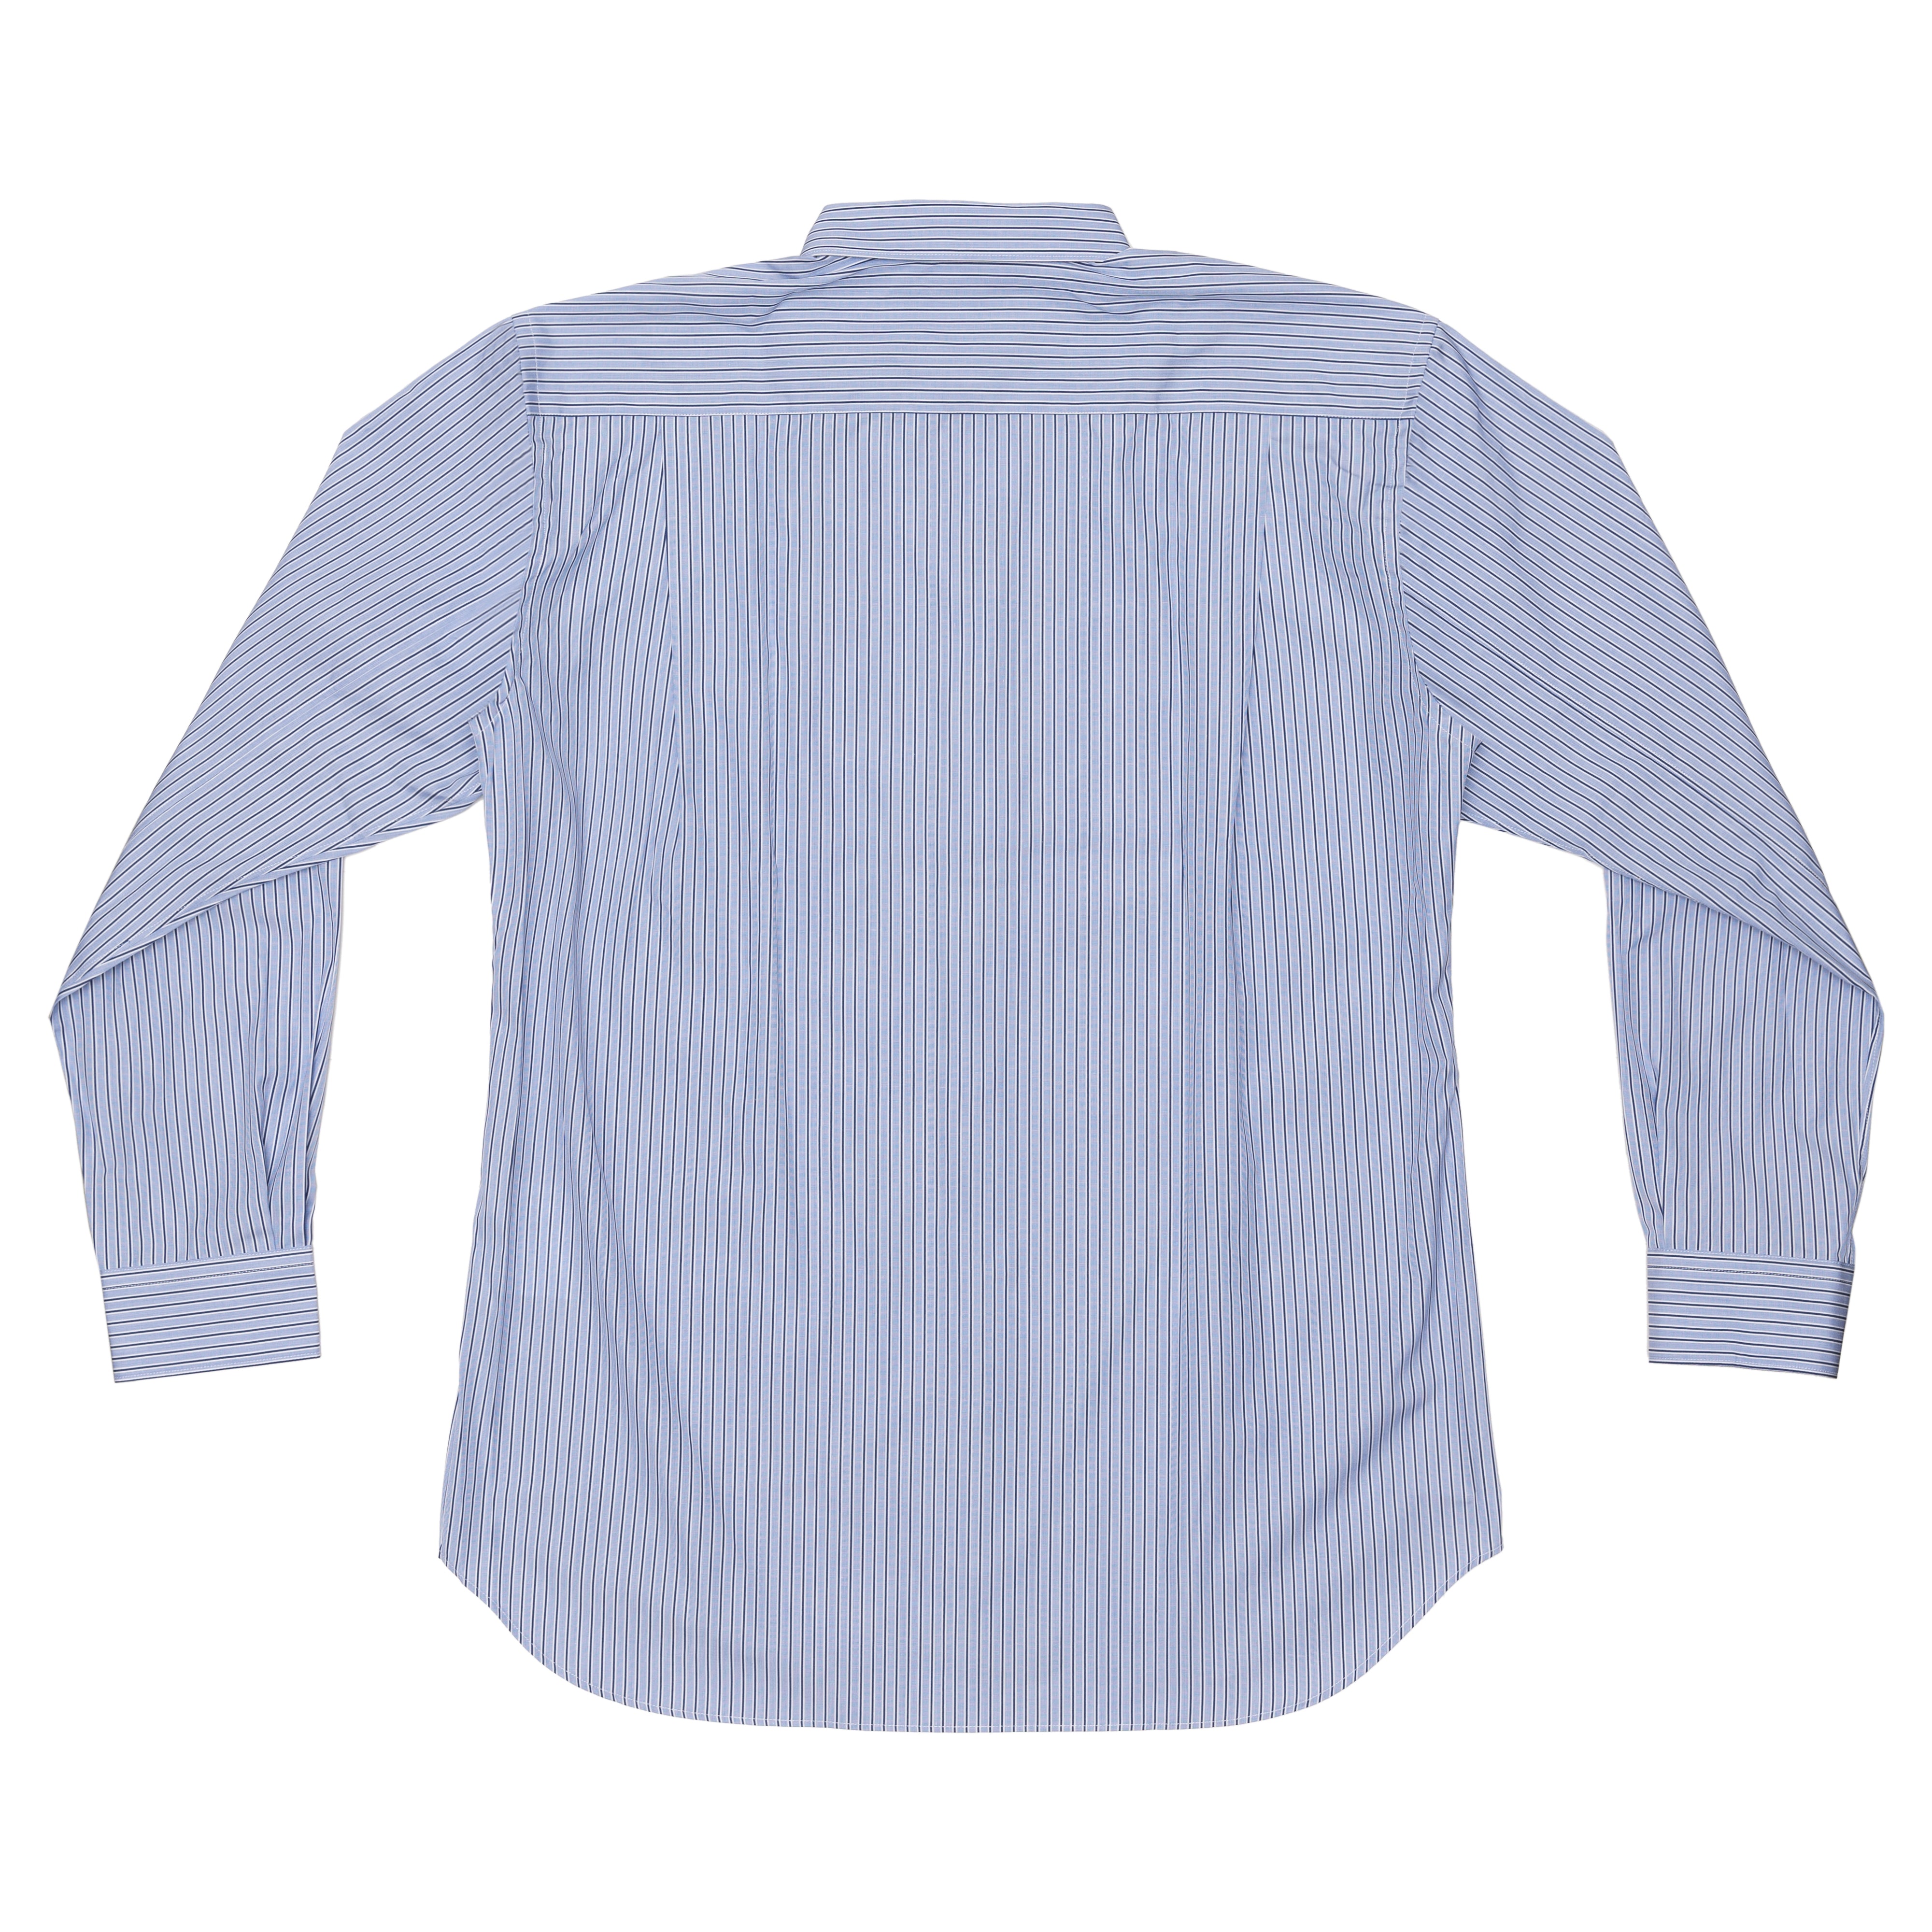 CDG SHIRT FOREVER -Narrow Classic Yarn Dyed Cotton Poplin Shirt 